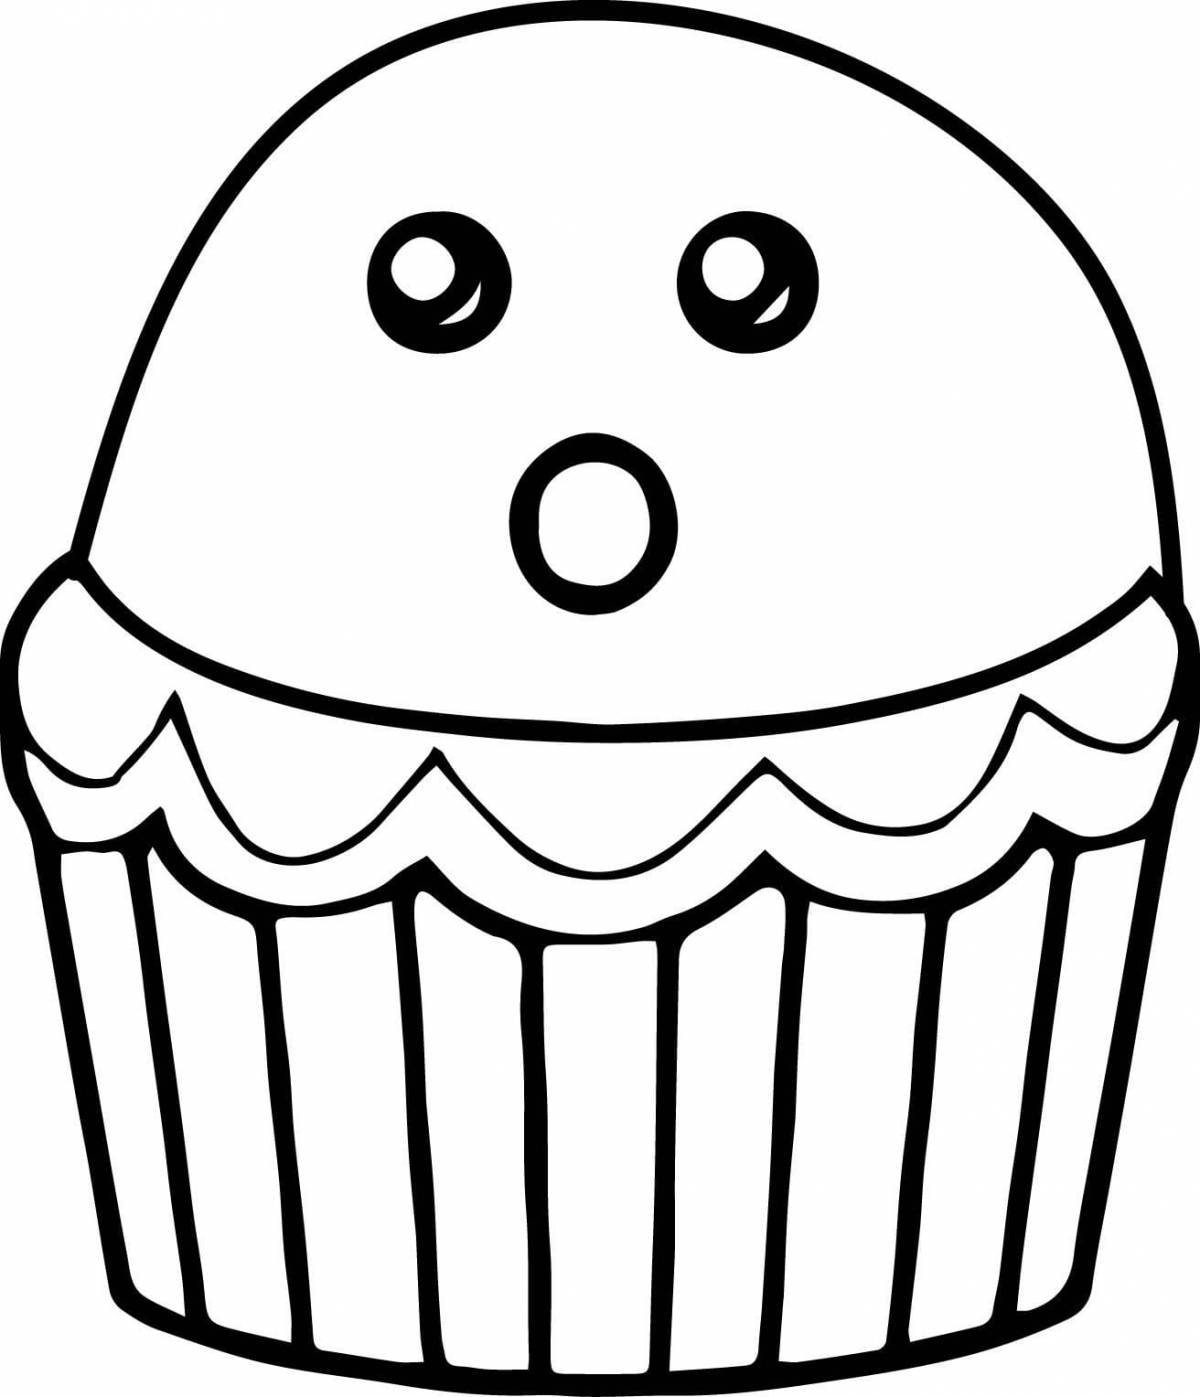 Savory cupcake coloring page